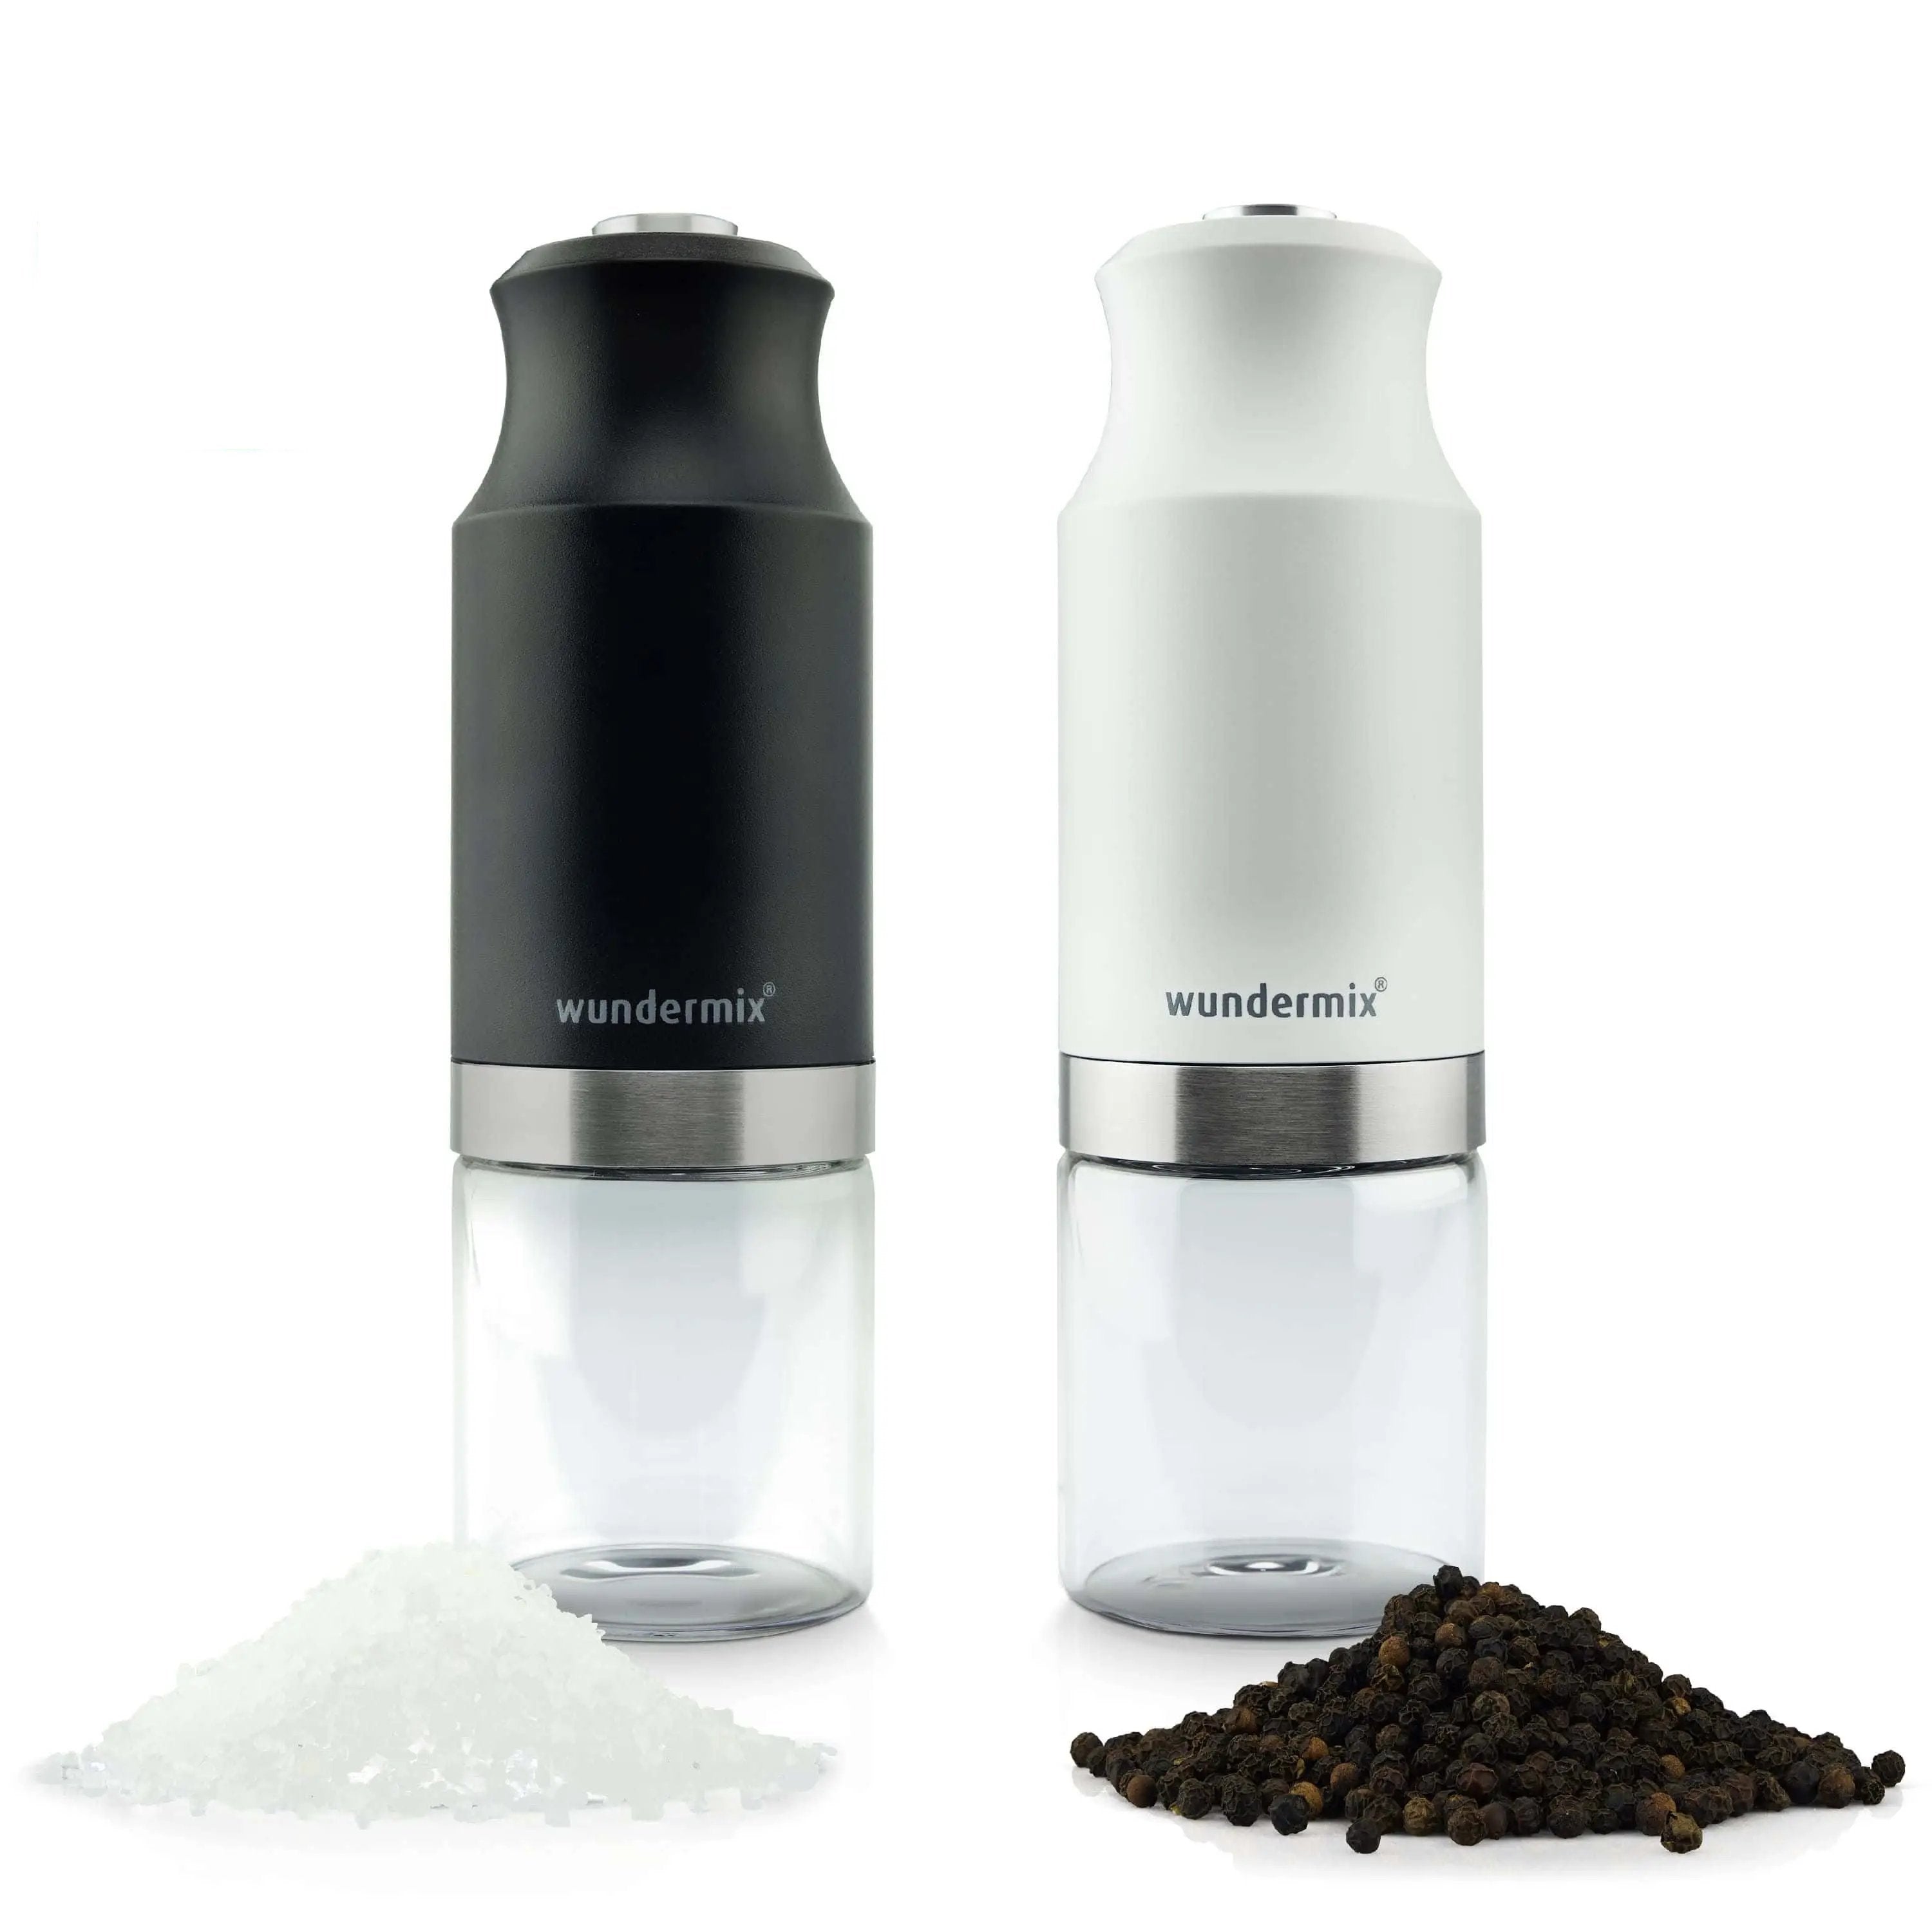 Electric salt or pepper mill with ceramic grinder